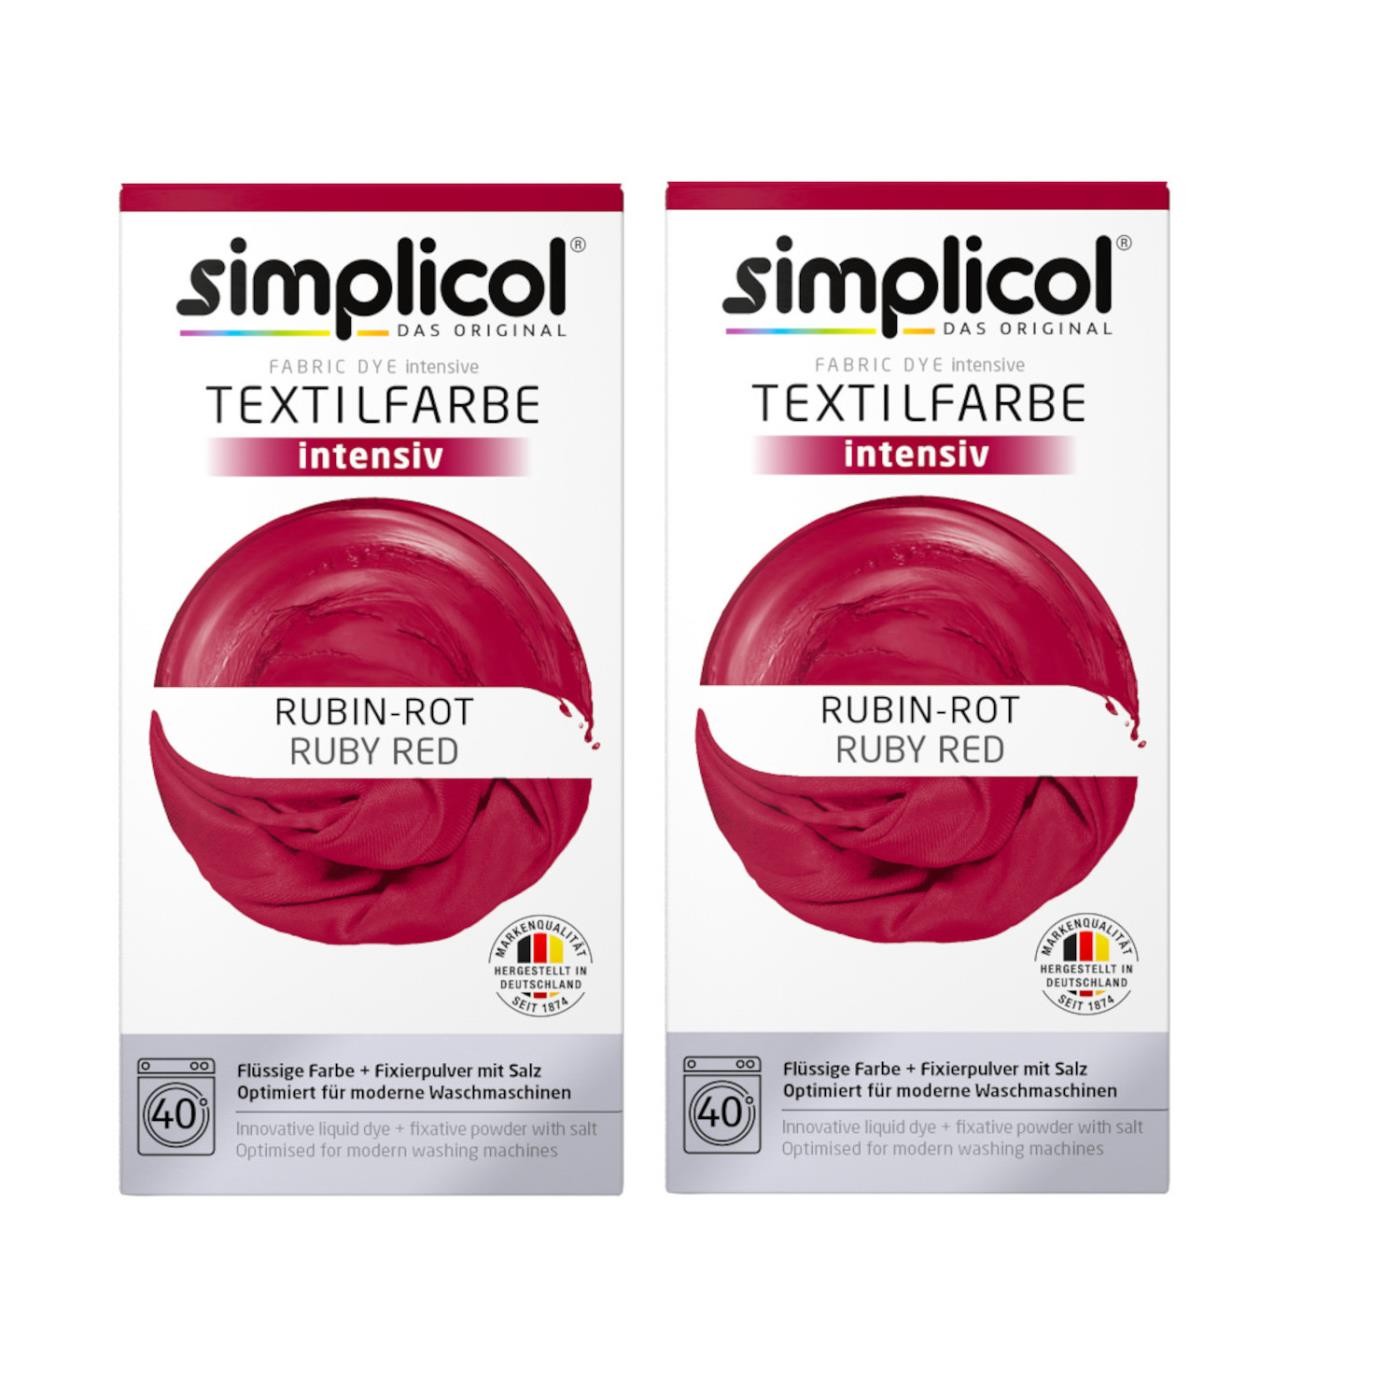 Simplicol Textilfarbe intensiv Rubin-Rot 150g 2er Pack